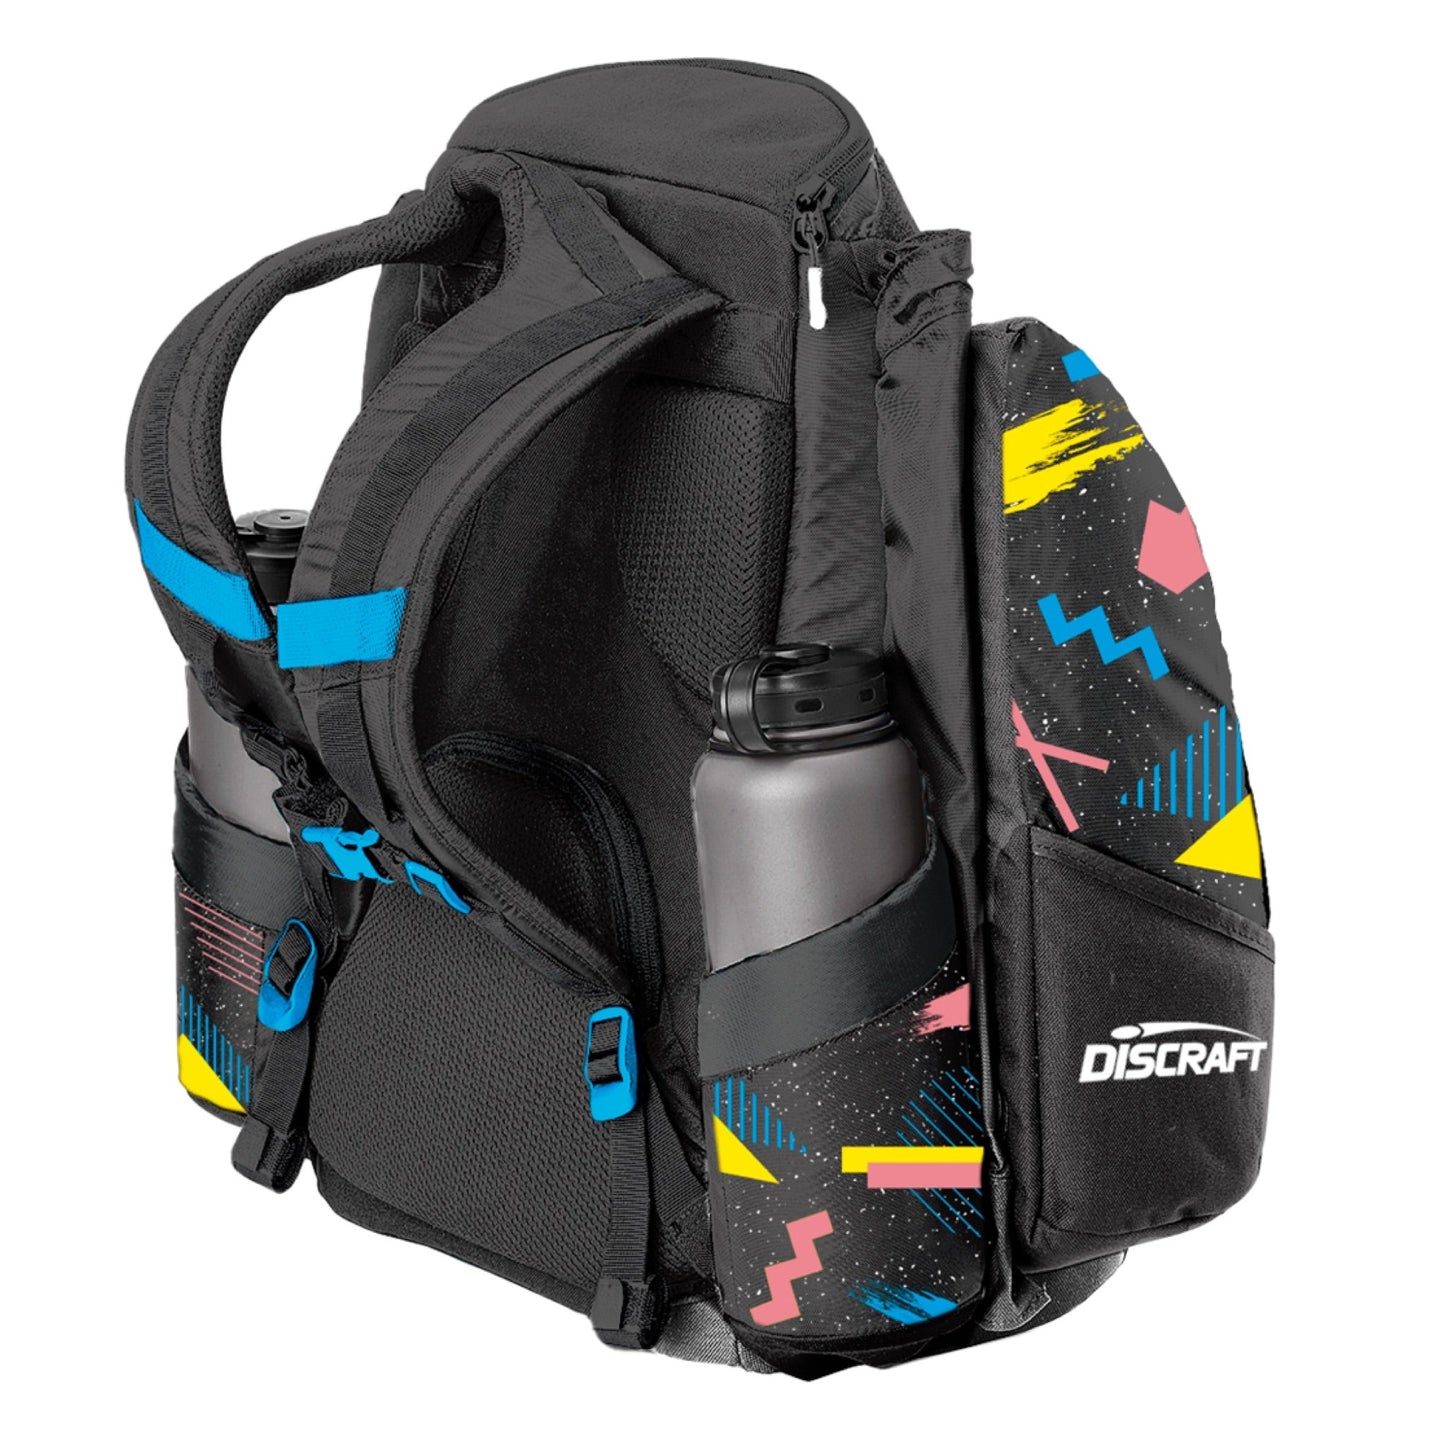 GRIPeq Discraft GRIPeq AX5 Backpack Disc Golf